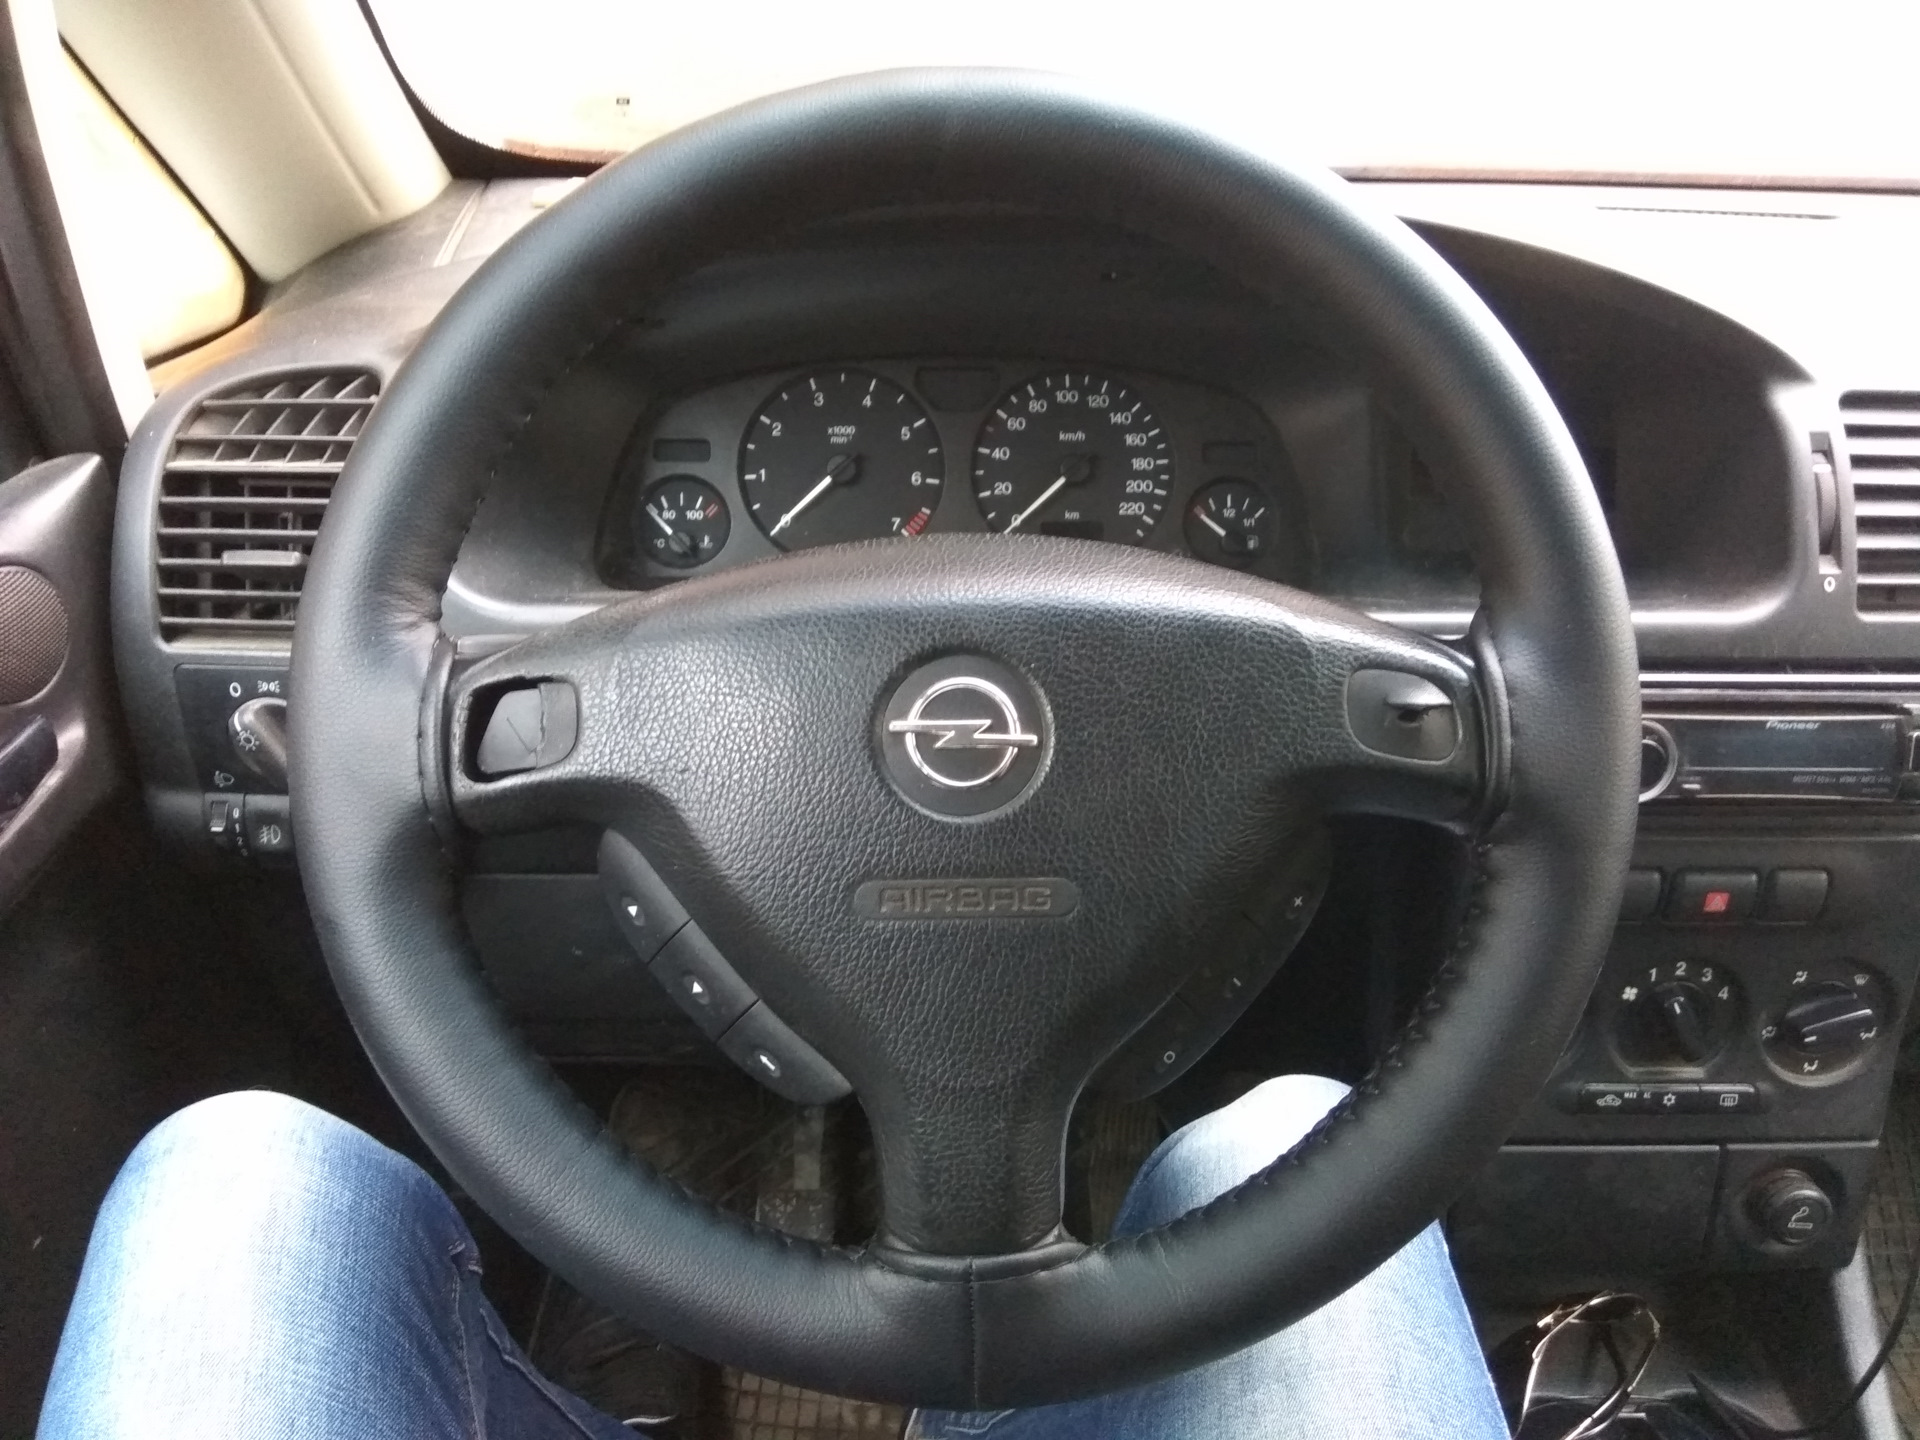 Руль вектра б. Руль Опель Зафира 2000. Opel Vectra c 2003 руль. Руль Опель Омега б 2003г.